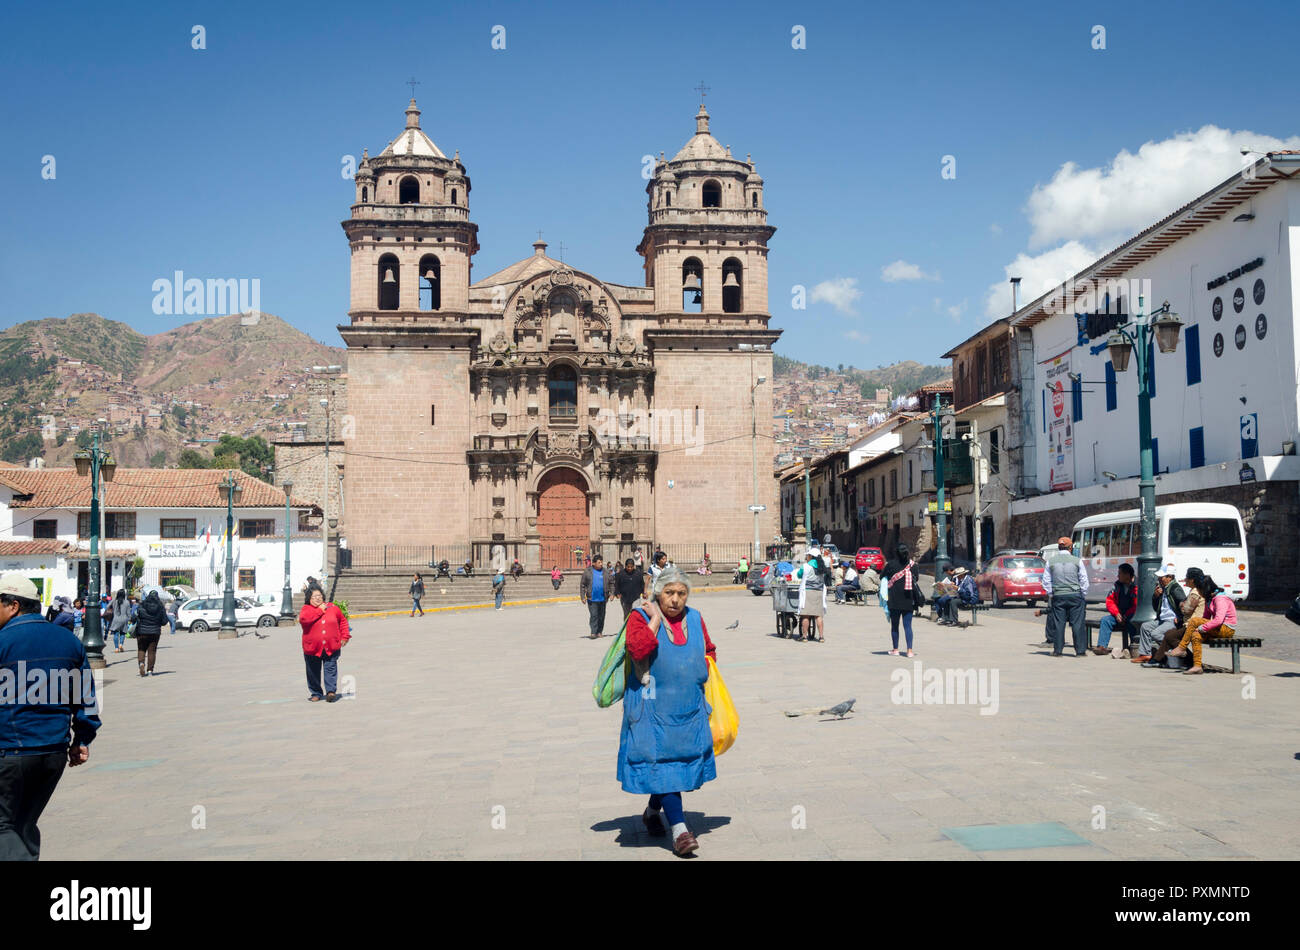 Iglesia de San Pedro, Plazoletta San Pedro, Cuzco, Peru Stock Photo